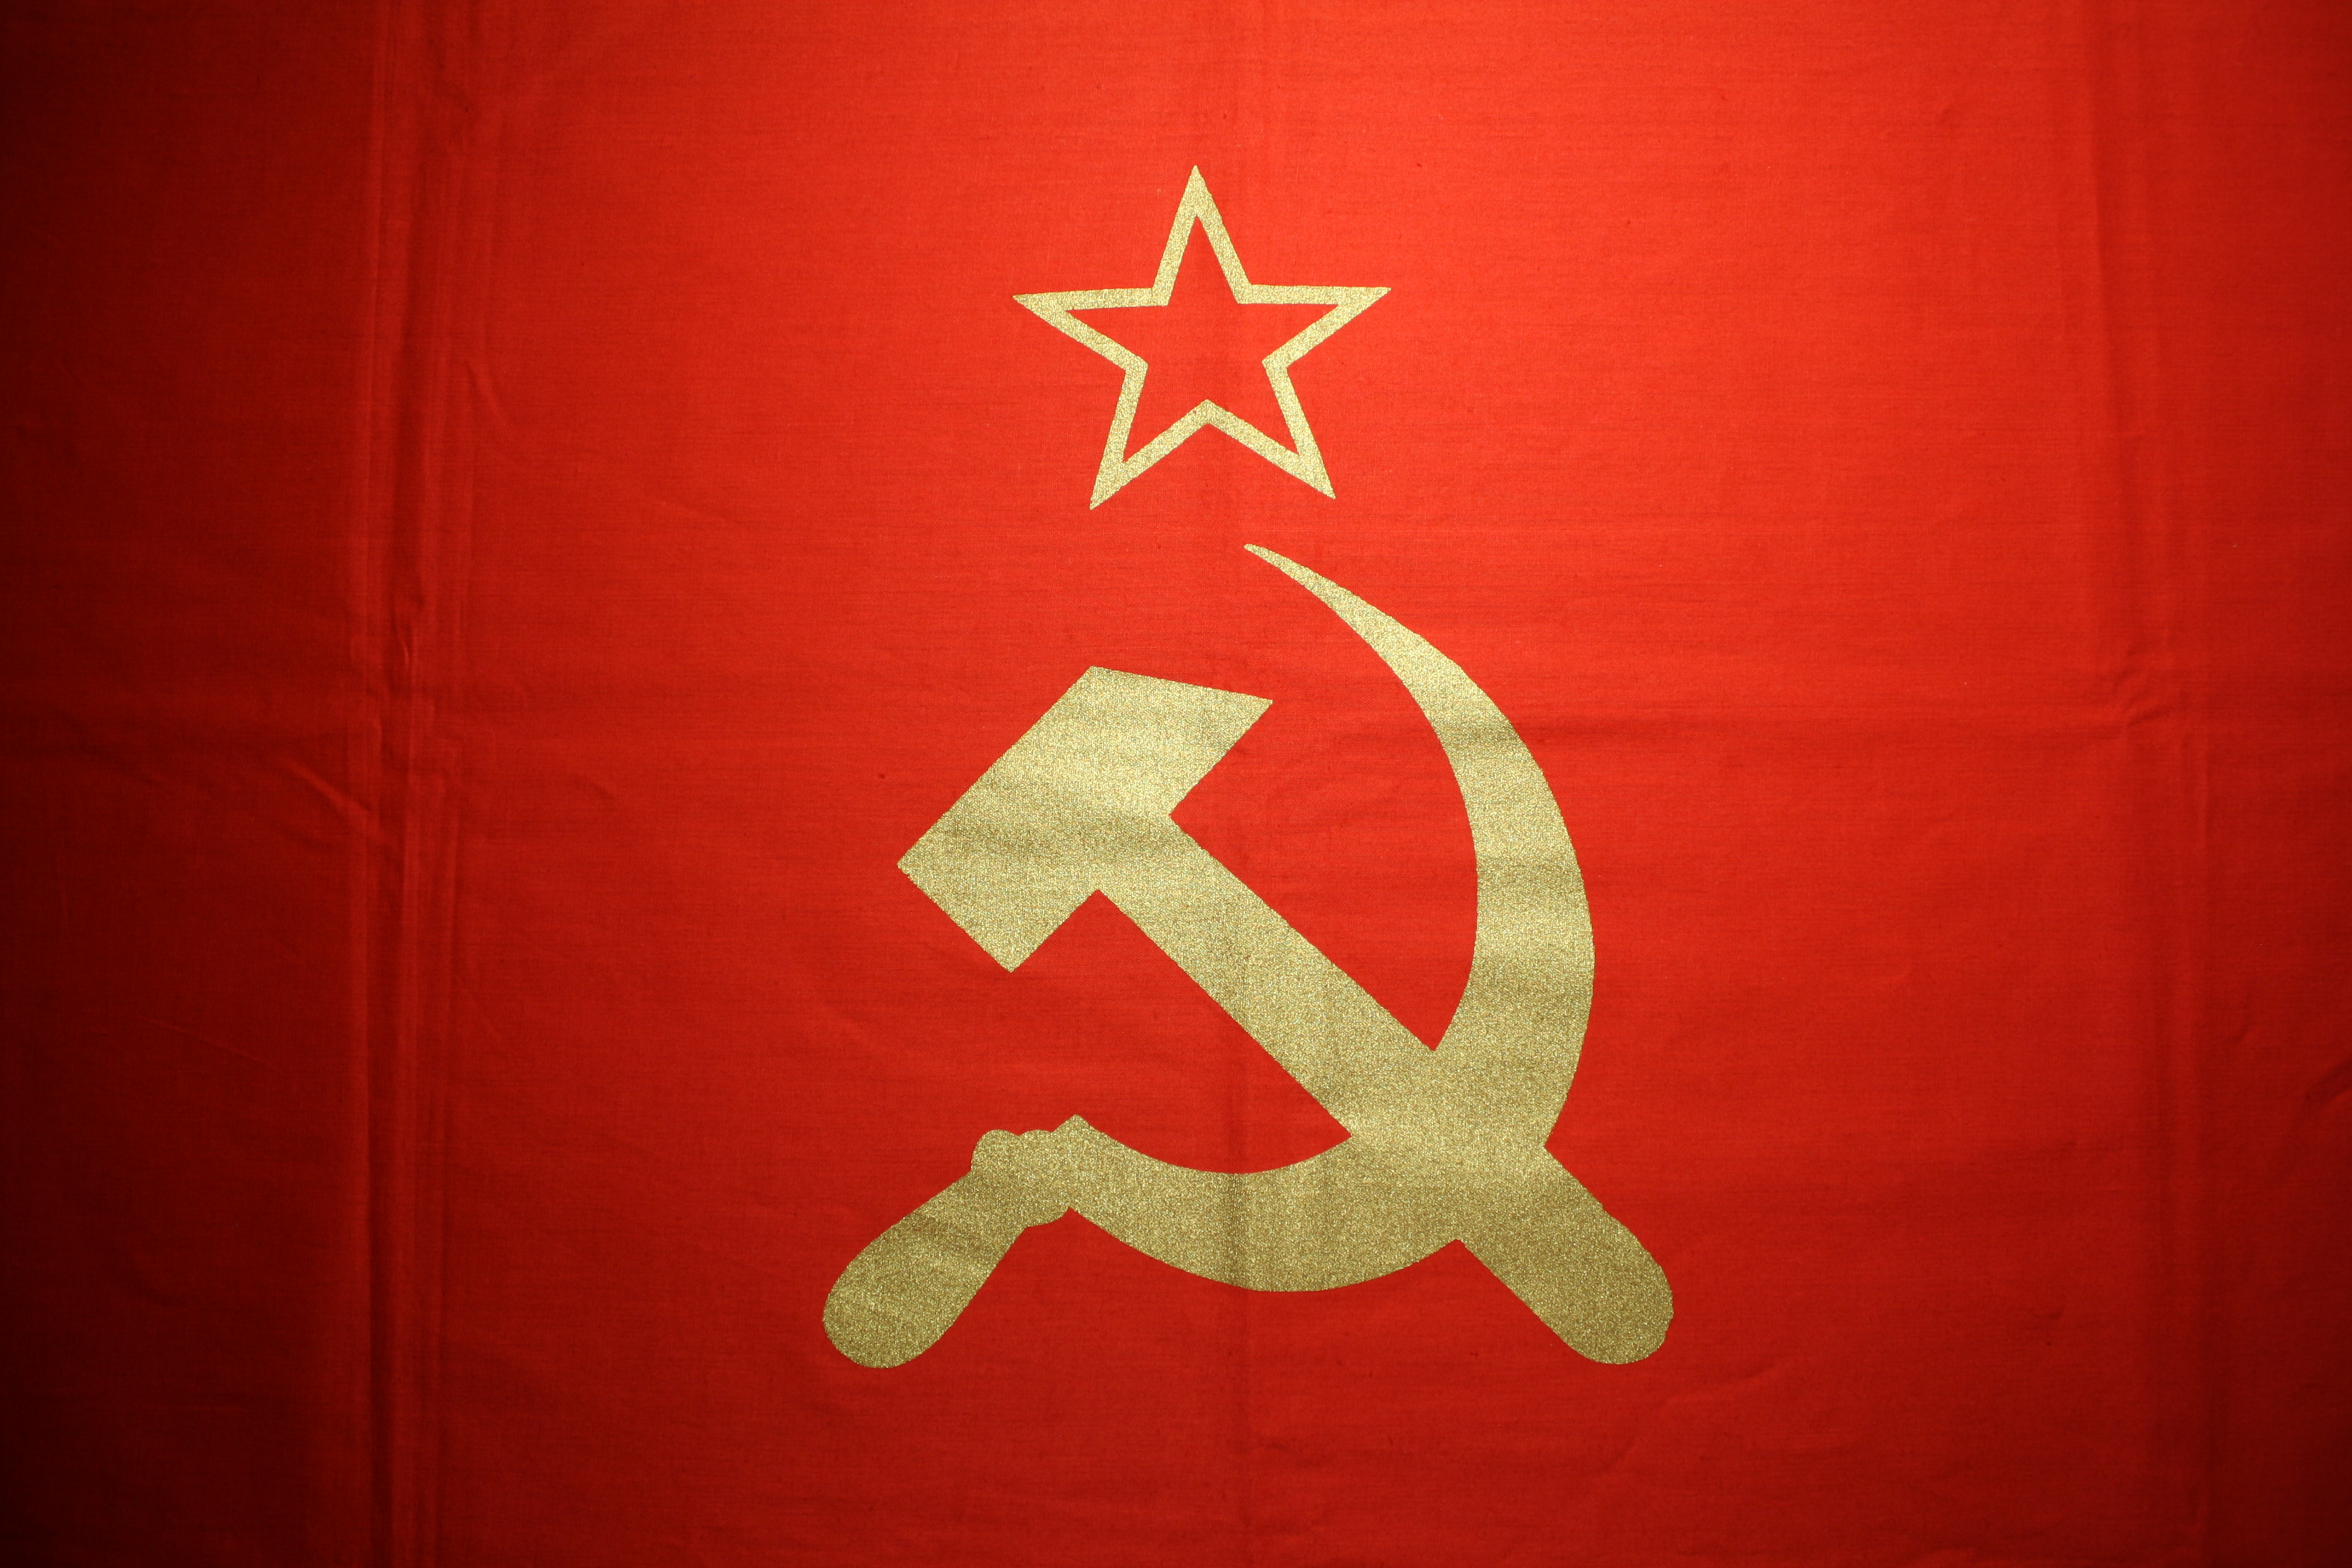 soviet flag